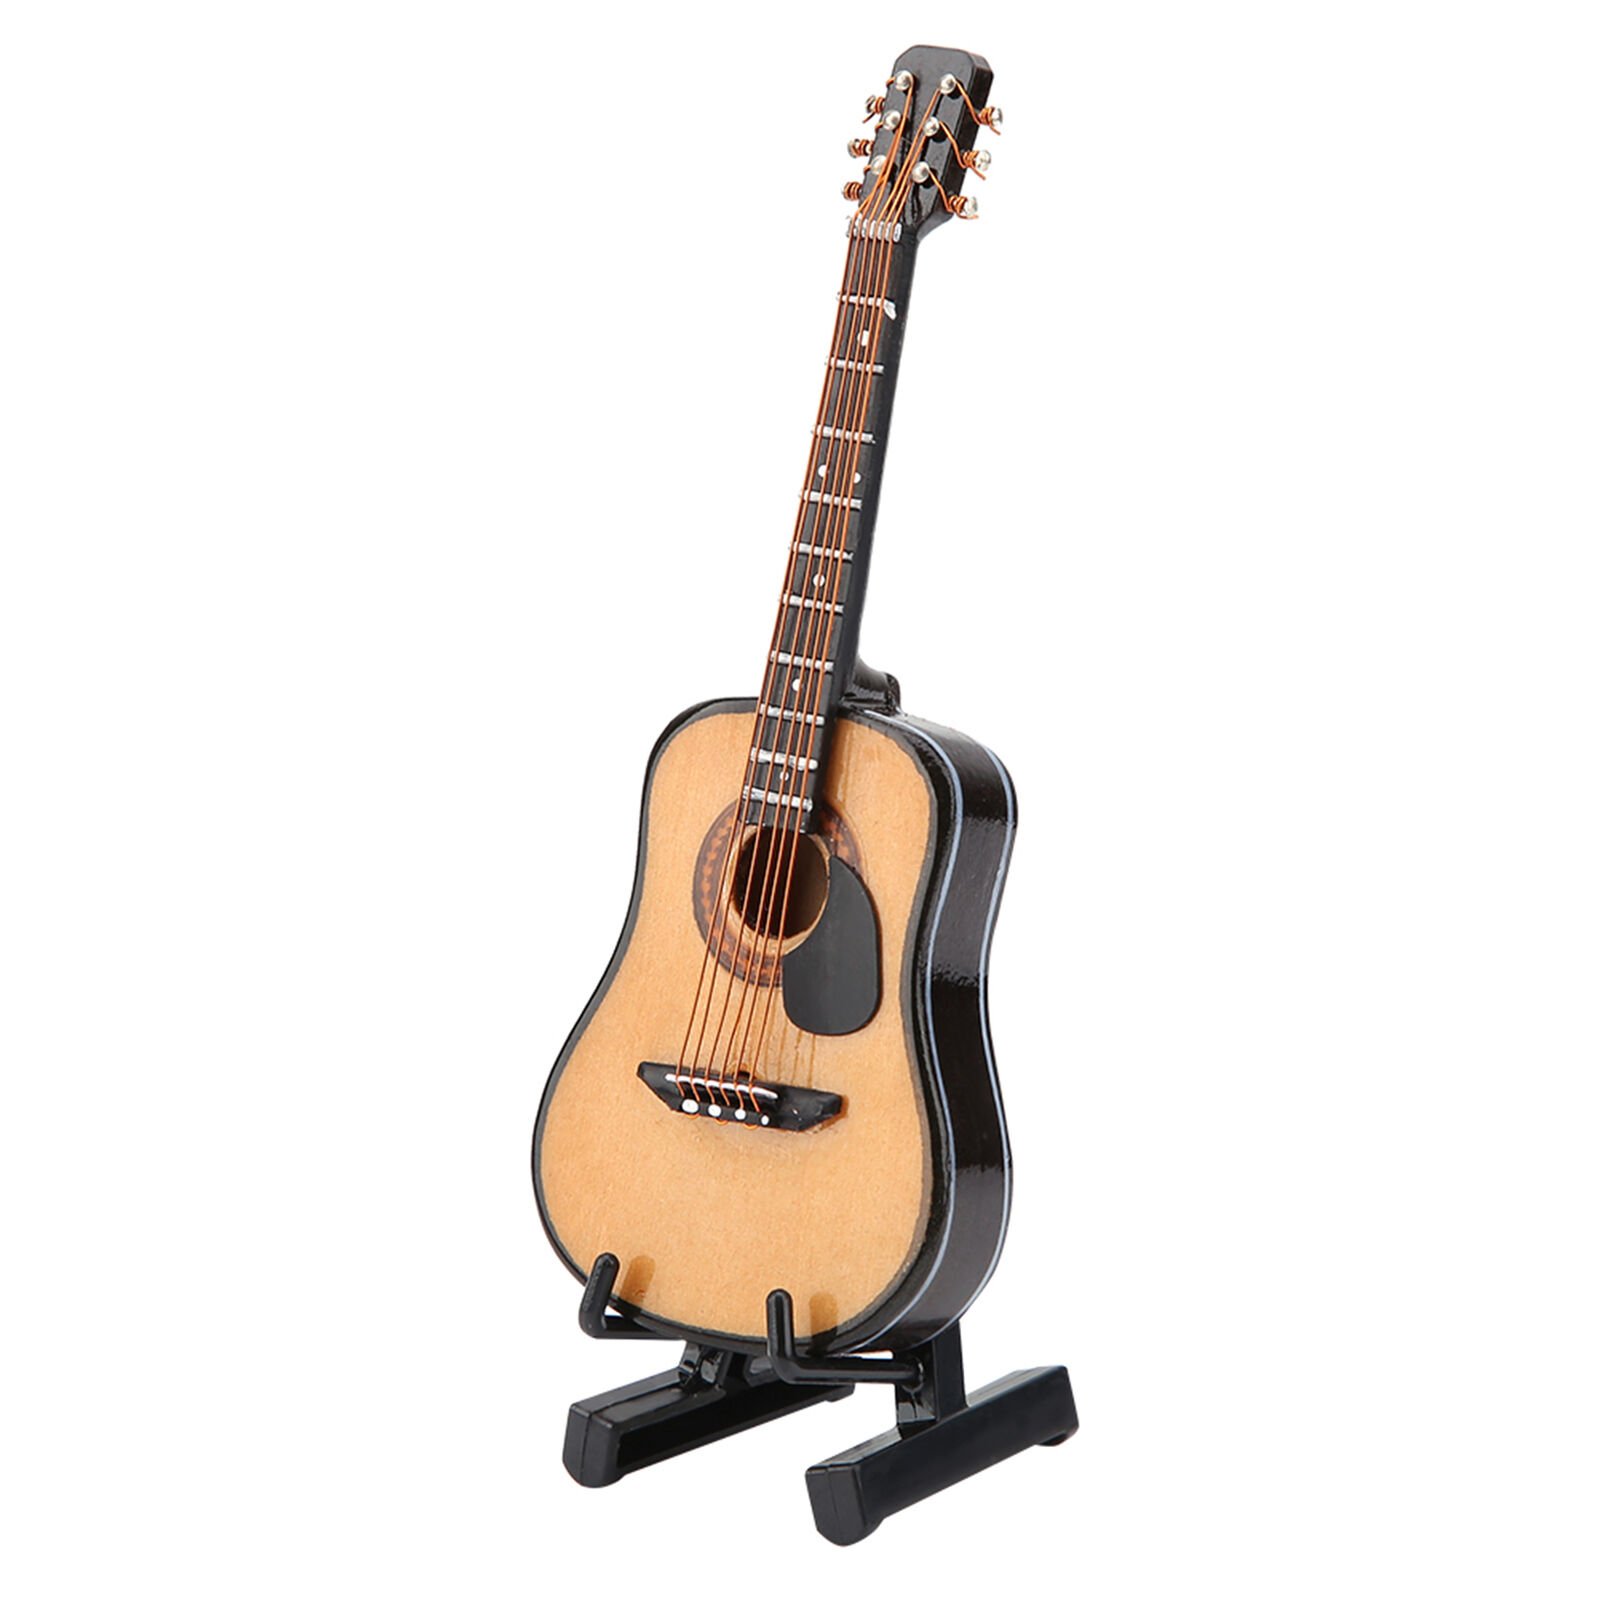 (10cm)Miniature Guitar Model Mini Wooden Guitar Instrument Model With Gift